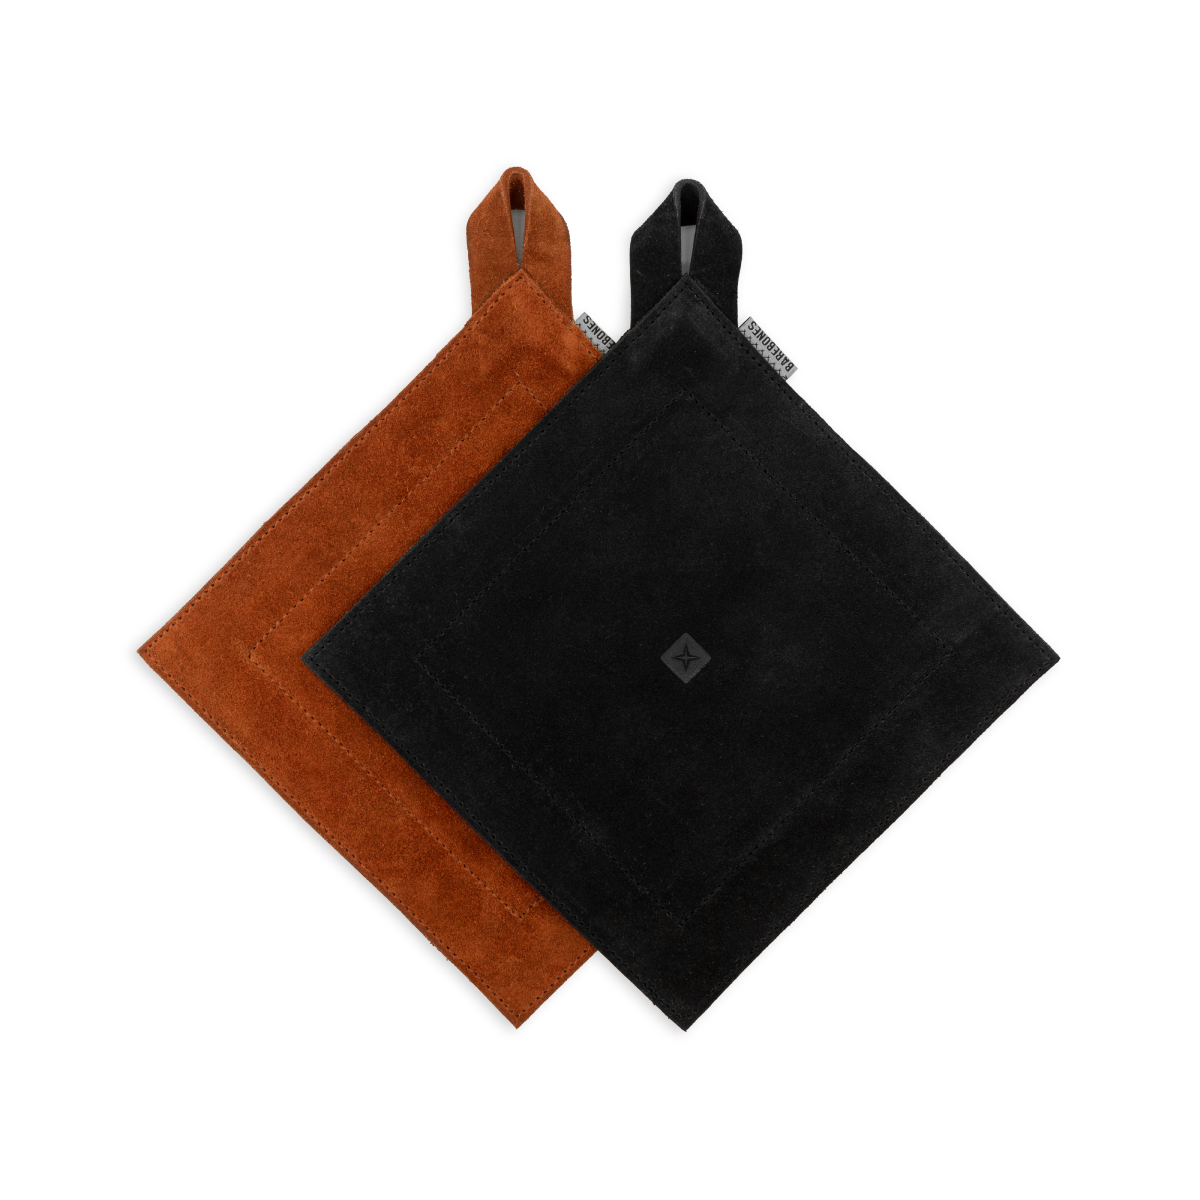 Zwarte of suède kleurige leather hot pad